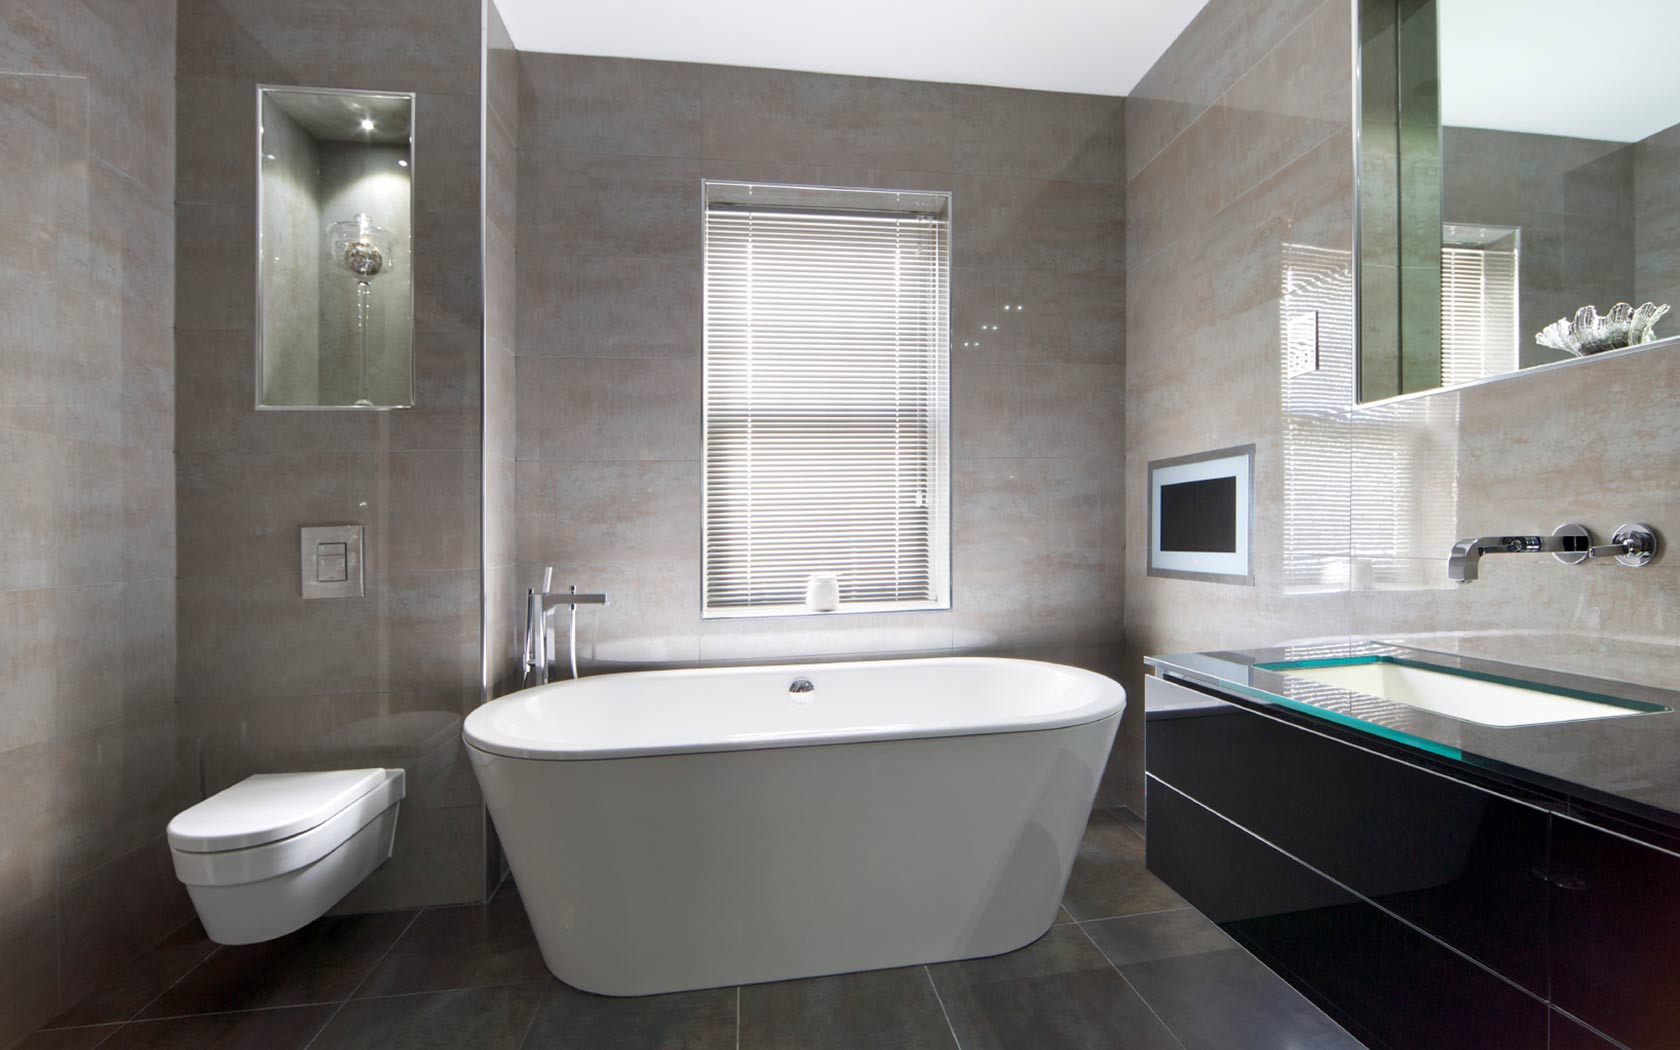 bathroom-wonderful-modern-black-and-white-bathroom-decoration-using-black-mirrored-bathroom-vanity-including-modern-floor-standing-white-ceramic-bathtub-and-light-gray-high-end-bathroom-tile-interact